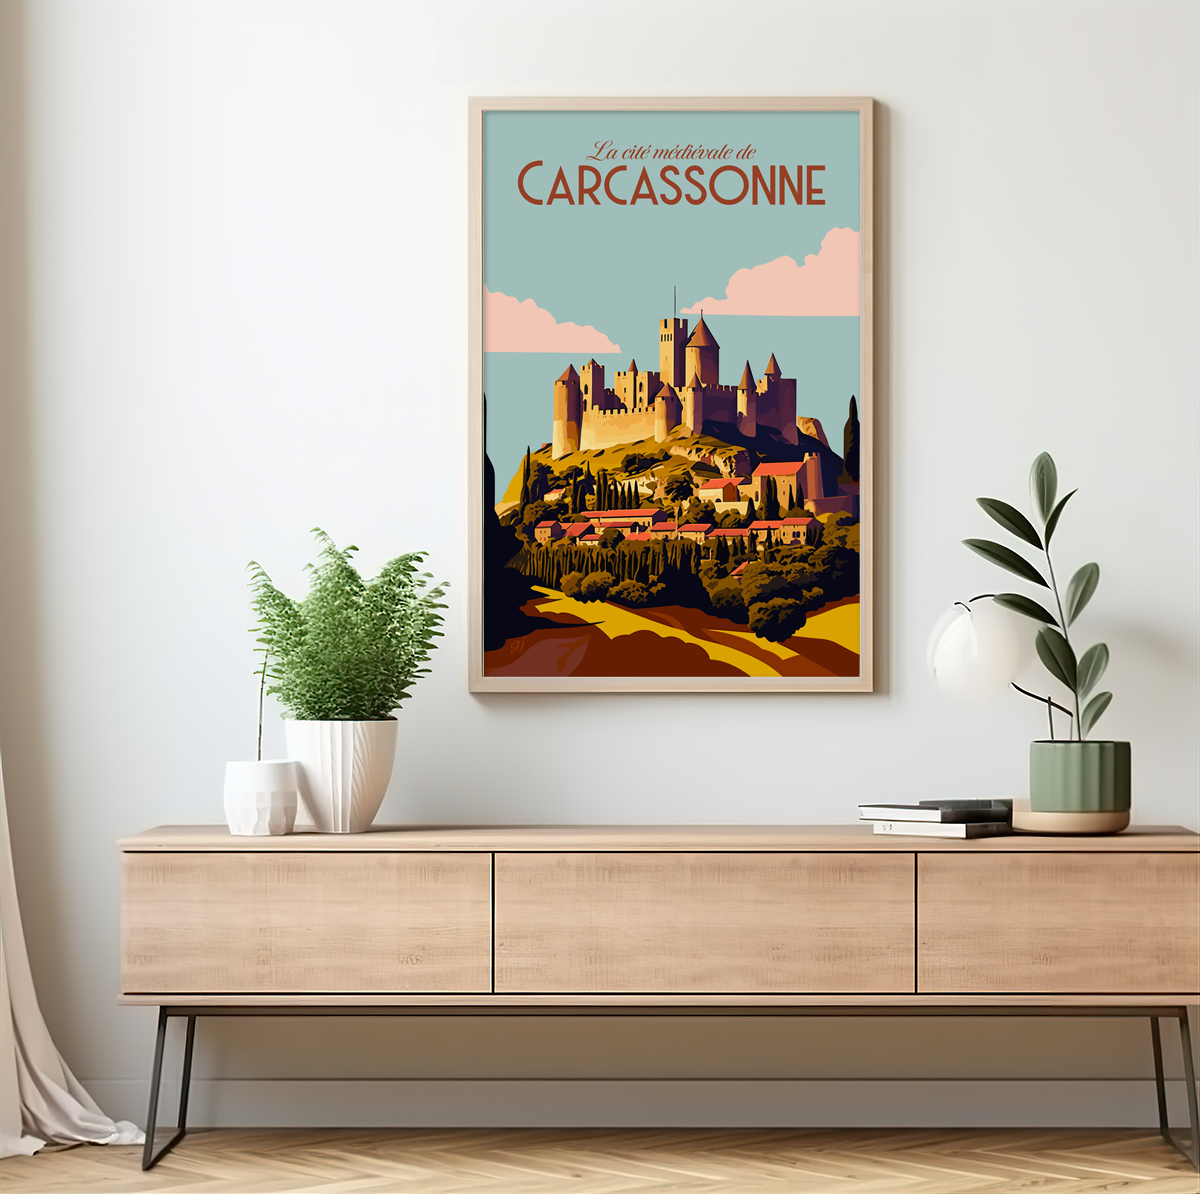 Carcassonne poster by bon voyage design